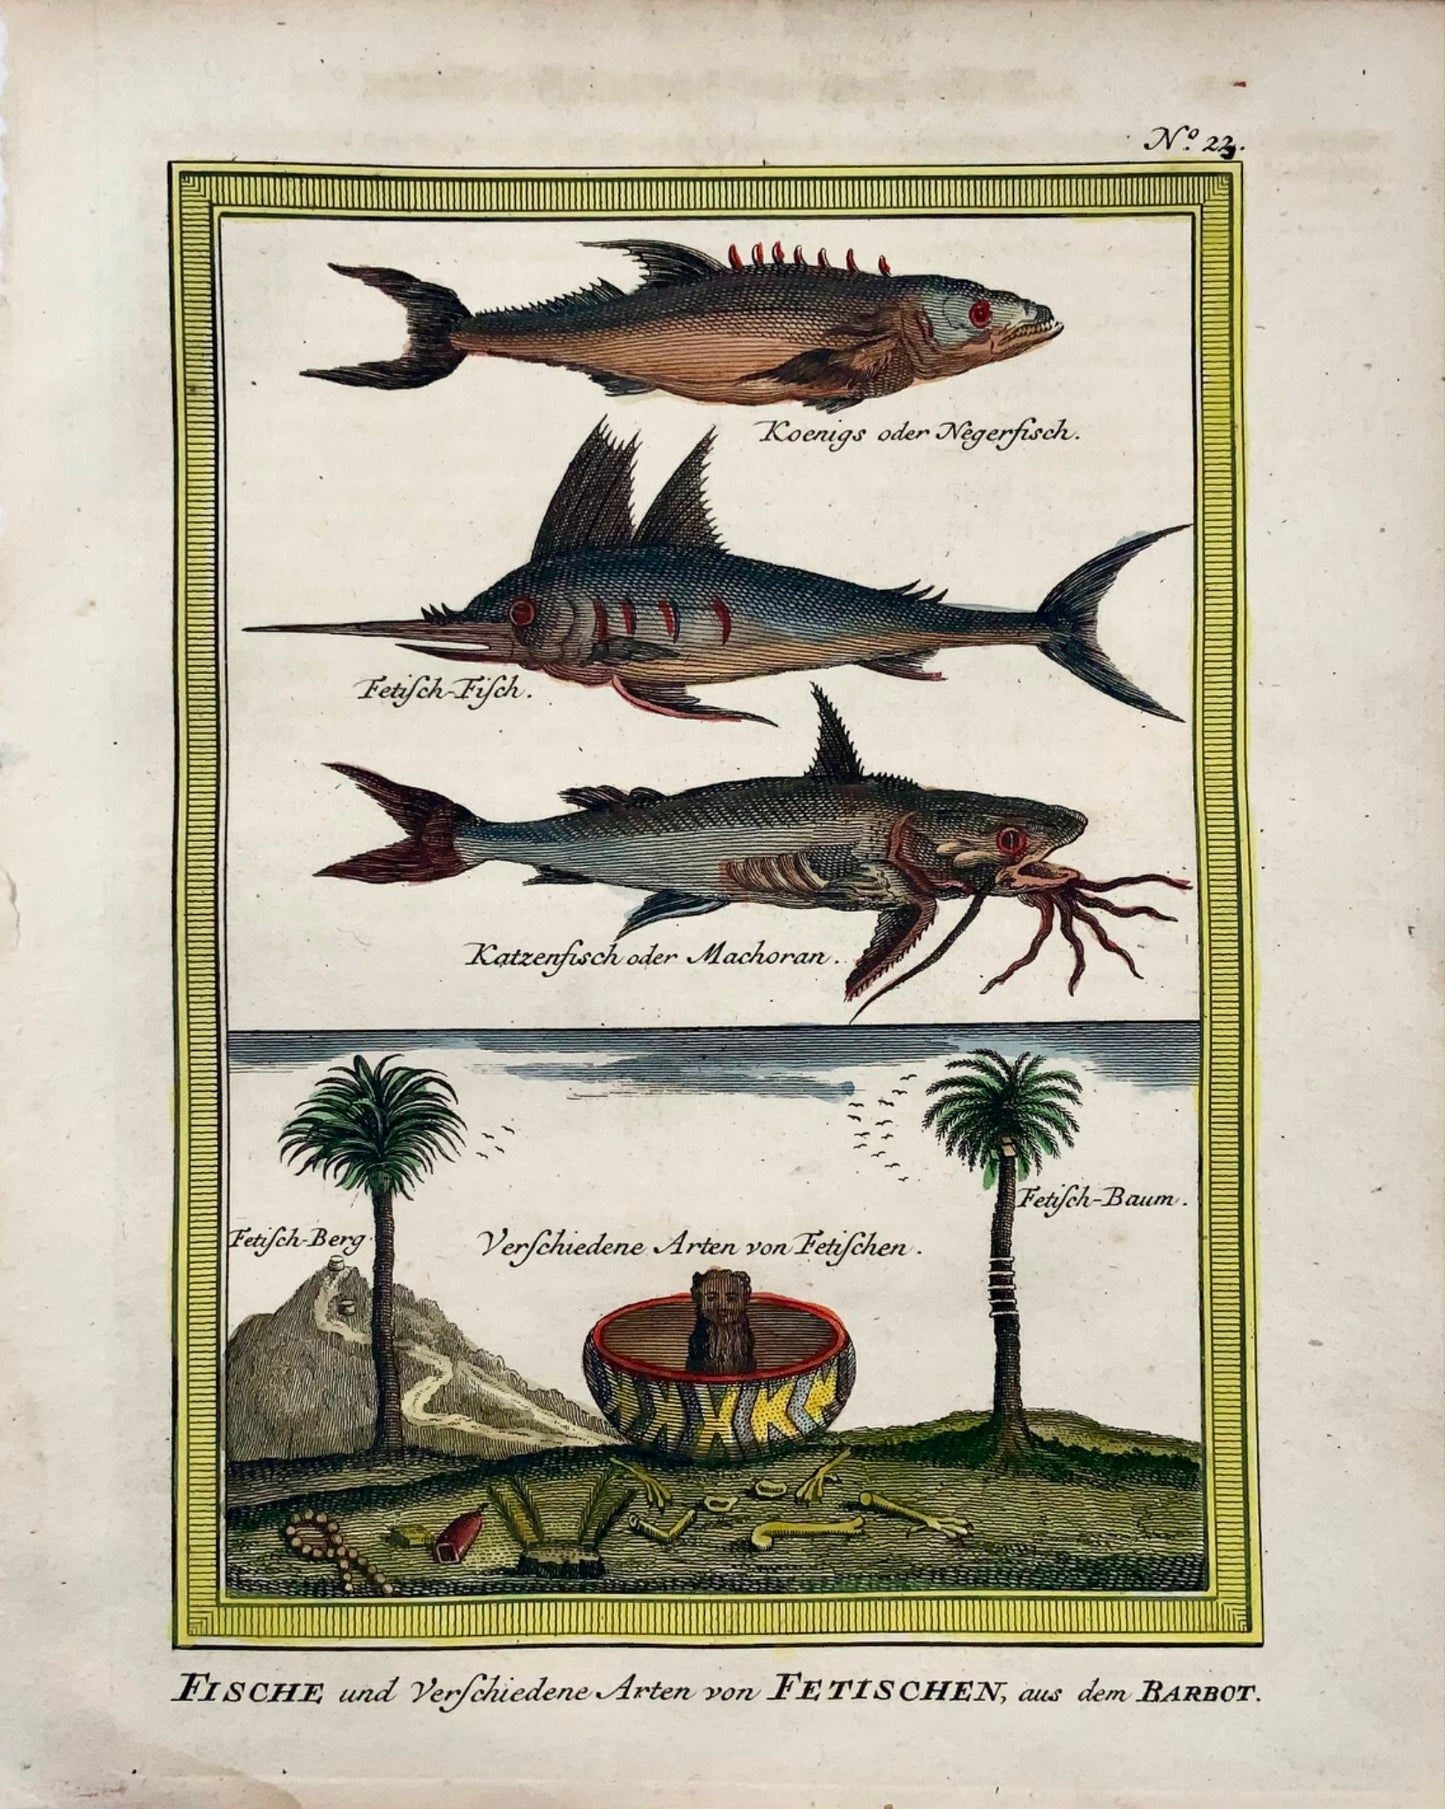 1749 Swordfish, Flying Fish, Catfish by J. Von Schley after Nieuhof, Fo